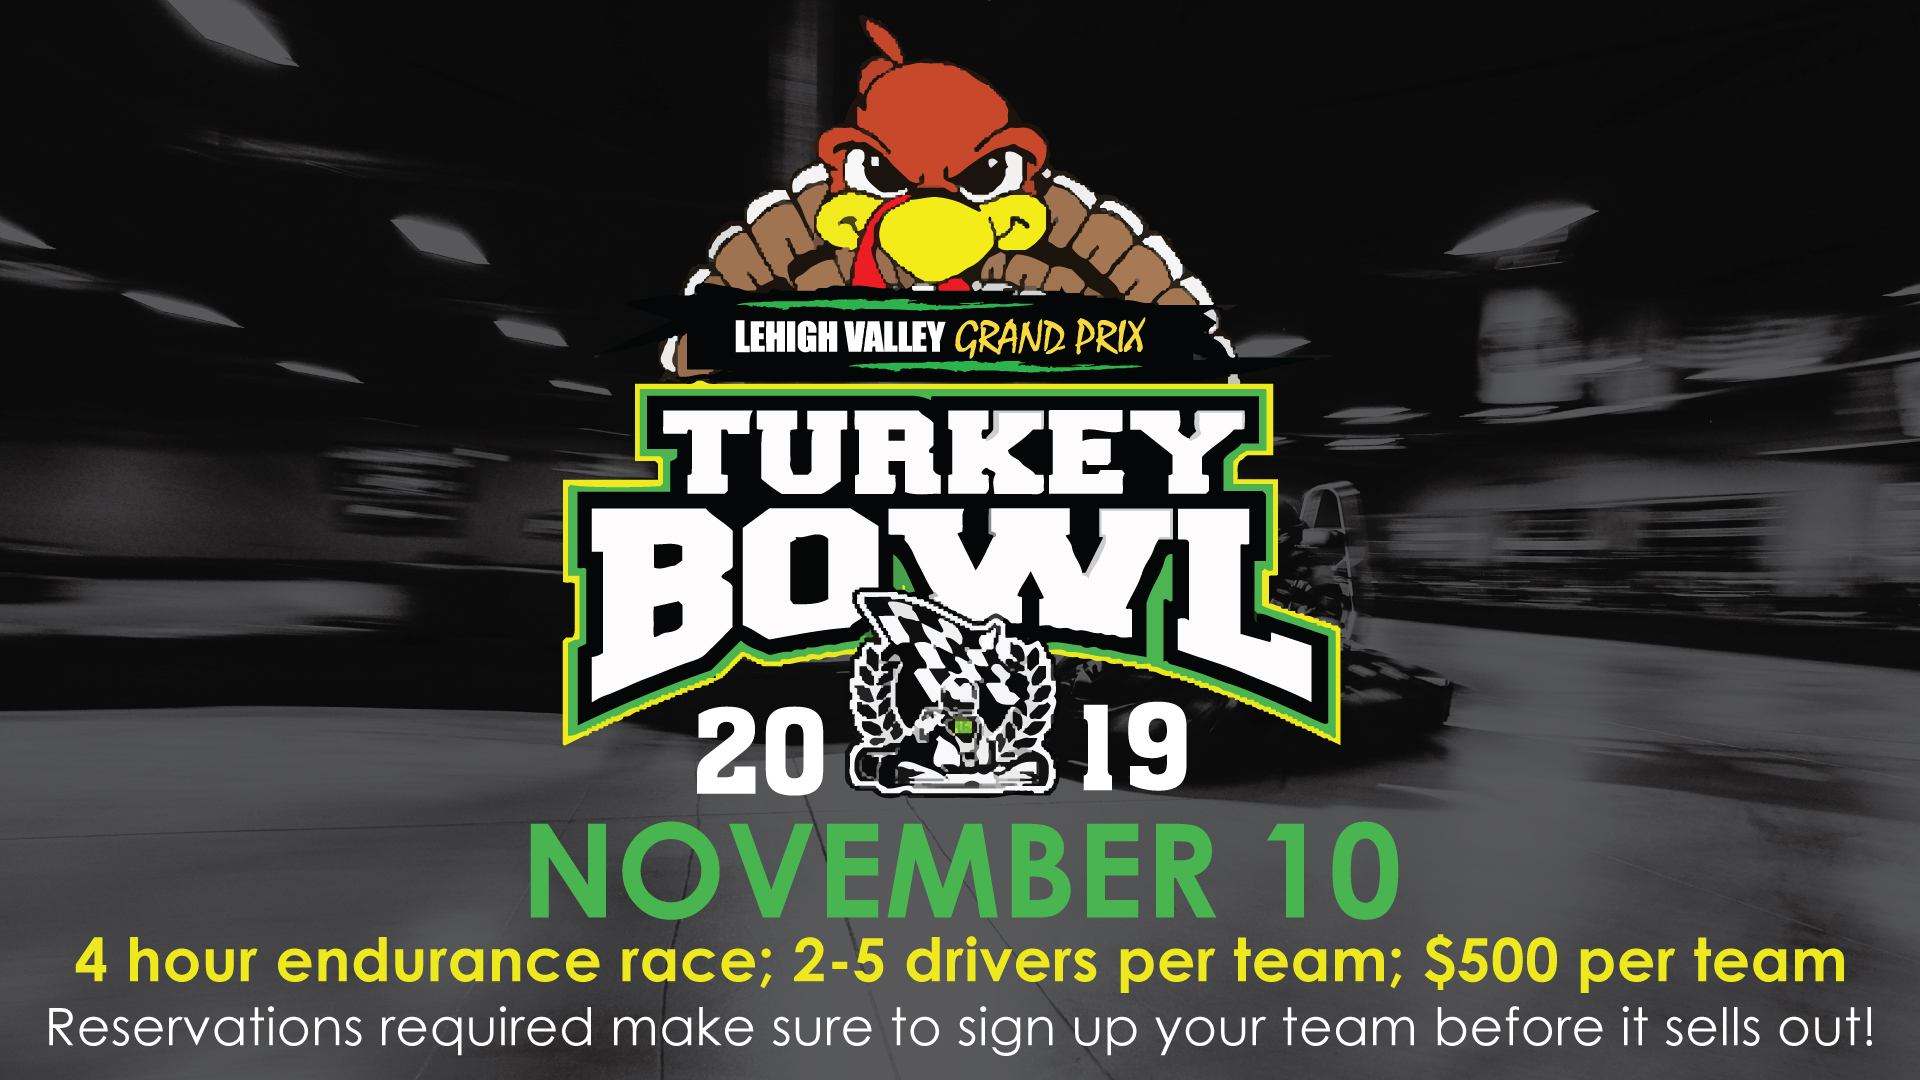 Lehigh Valley Grand Prix TV Slide Design for Turkey Bowl Event